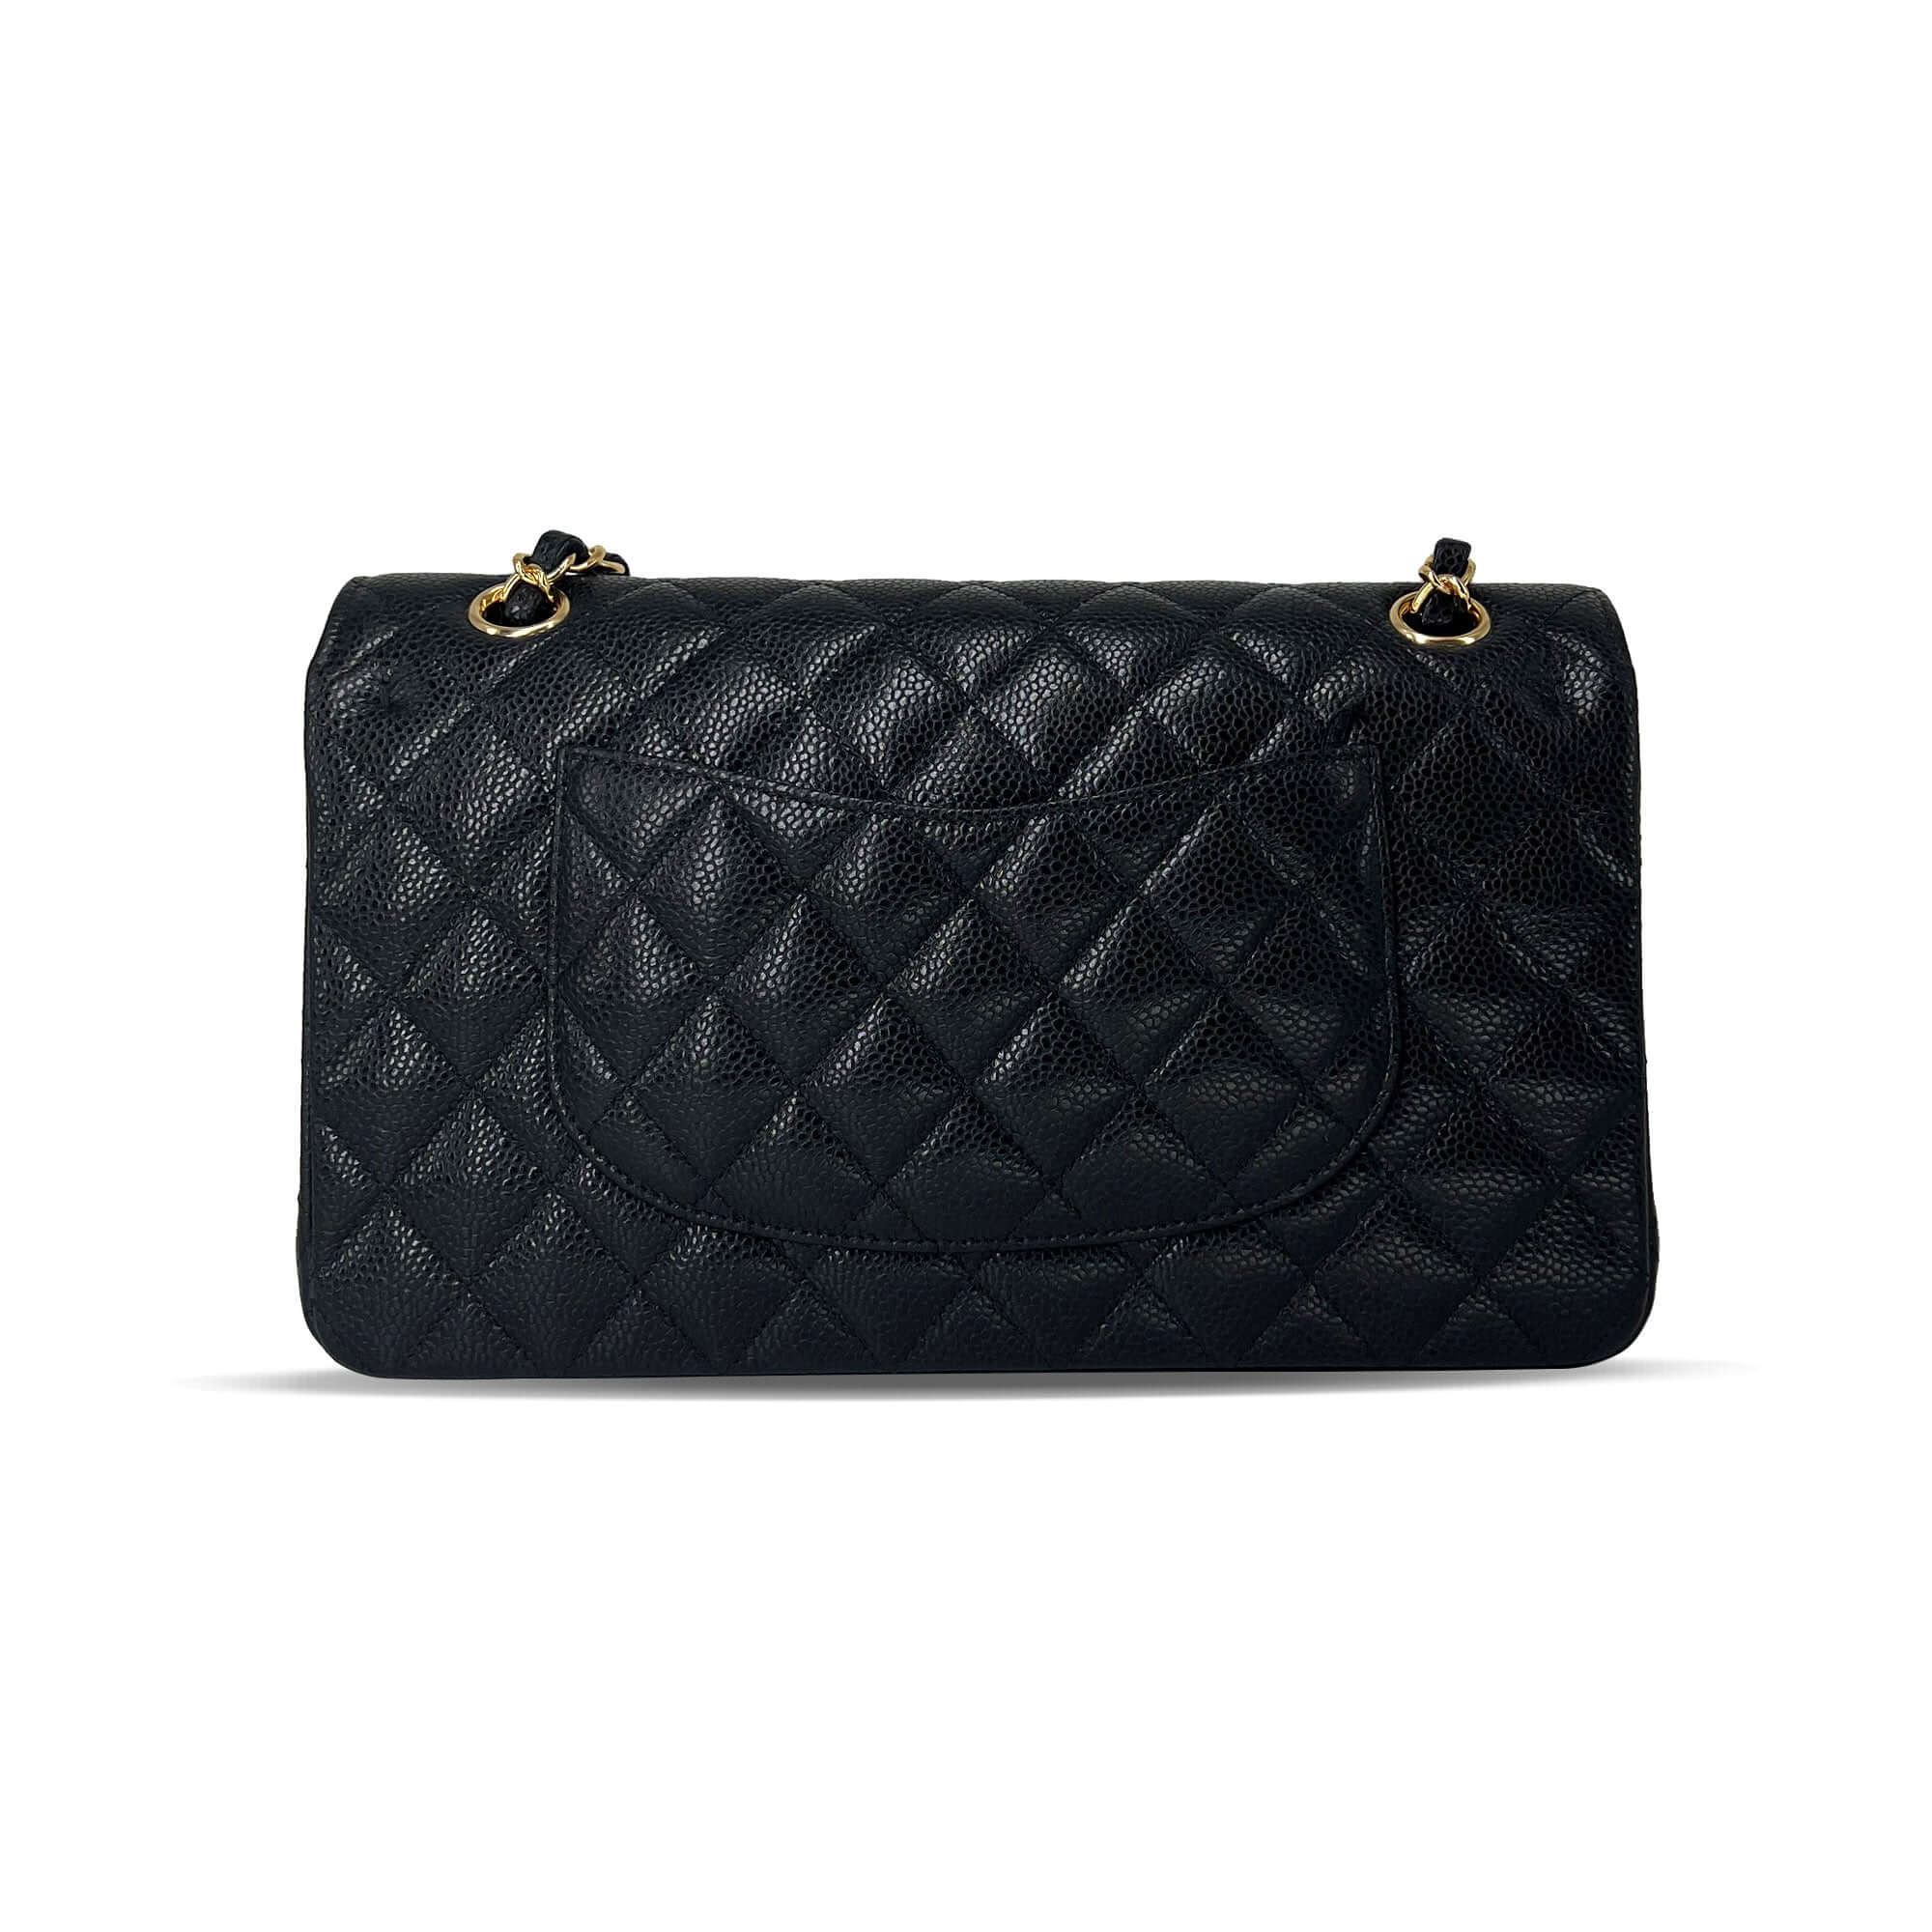 Chanel medium black caviar leather double flap closure bag